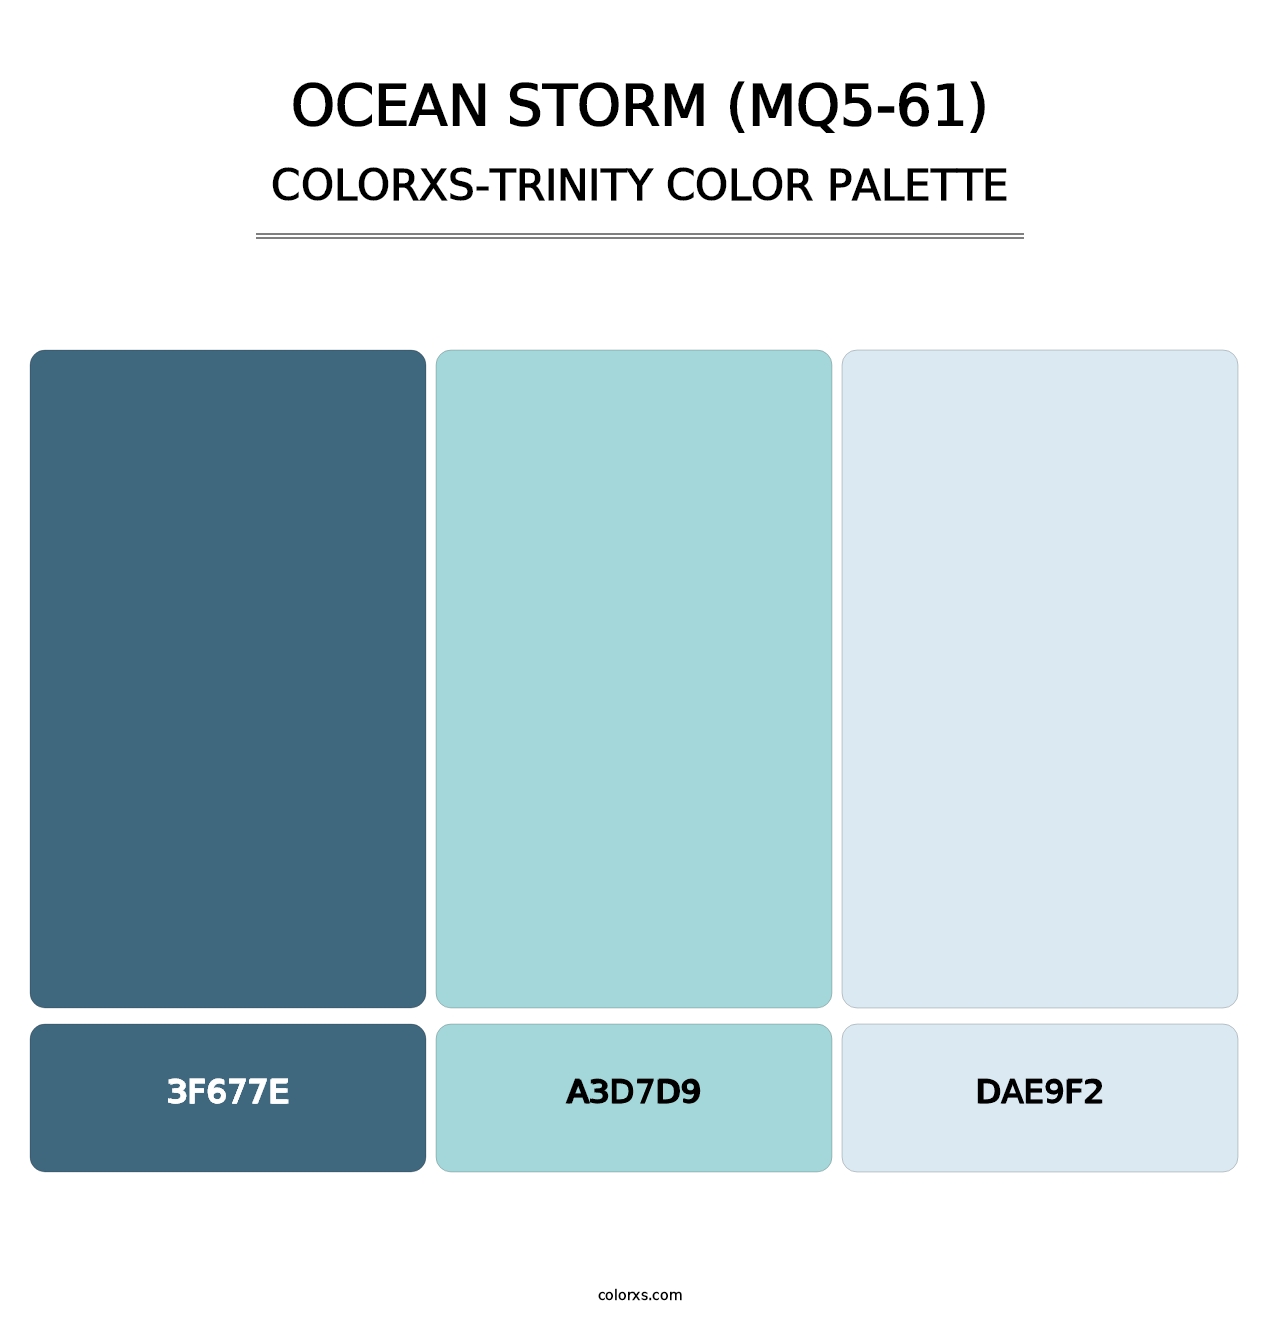 Ocean Storm (MQ5-61) - Colorxs Trinity Palette